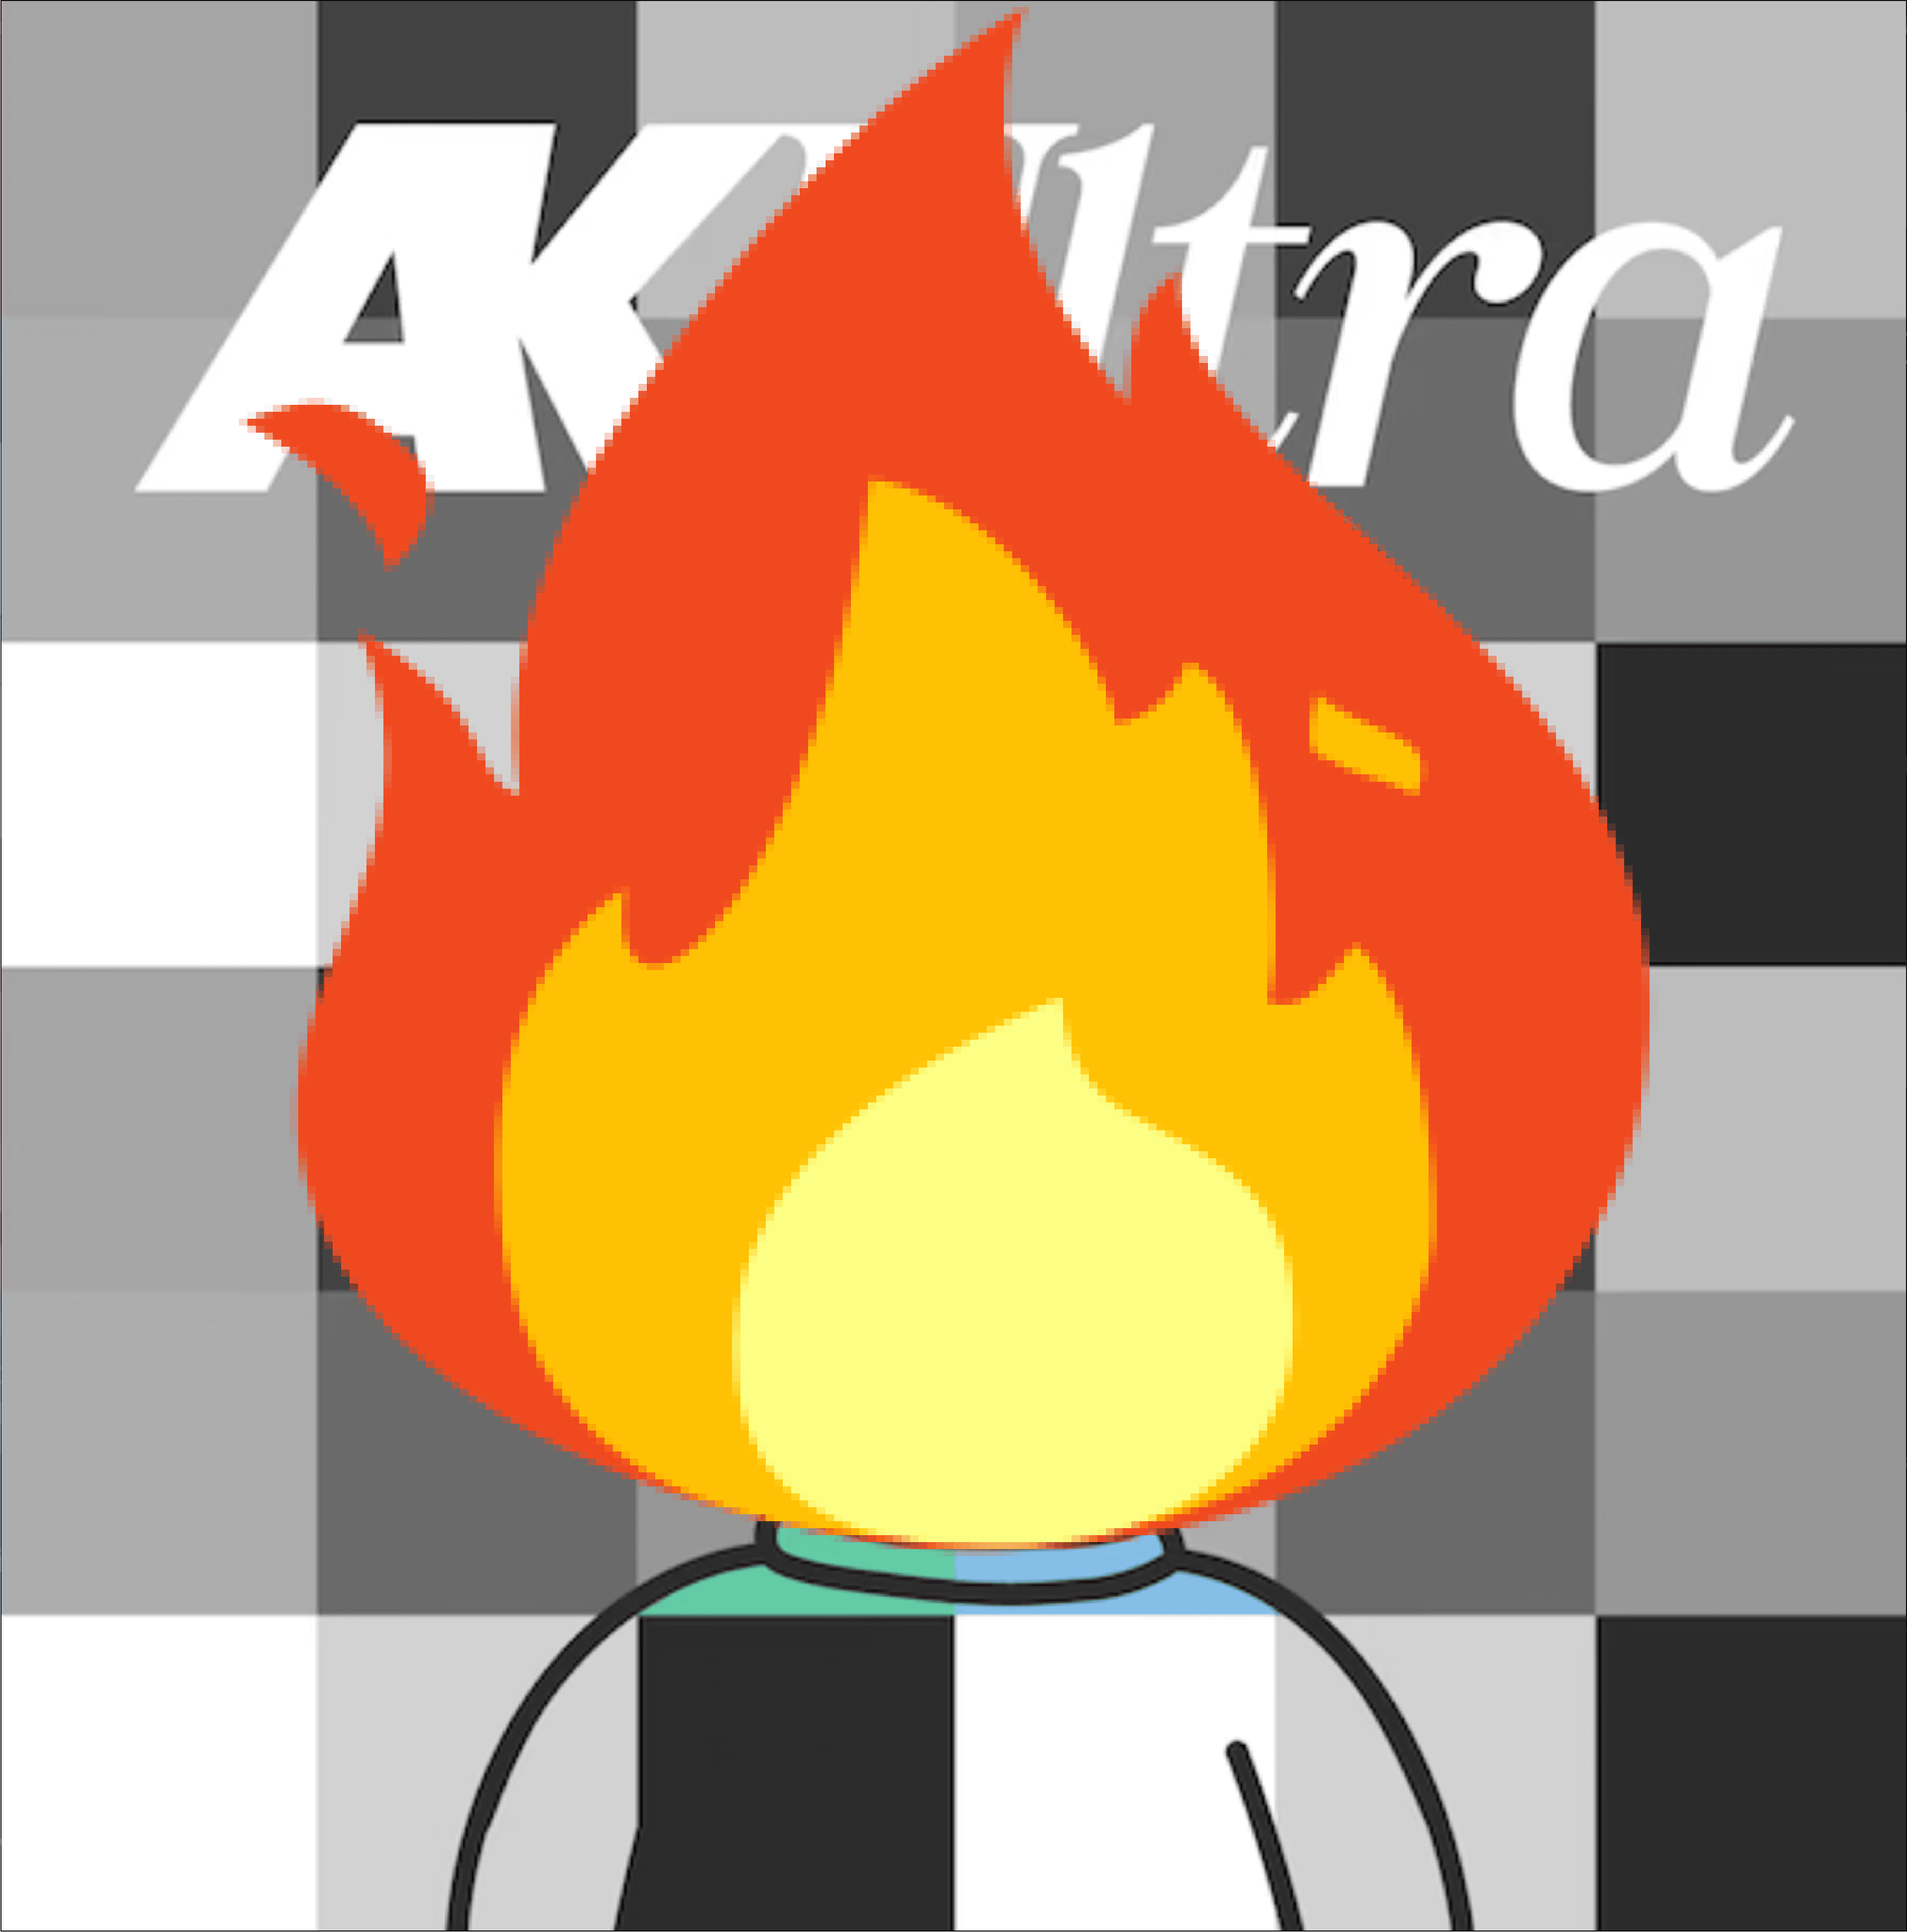 Burned By AKUltra